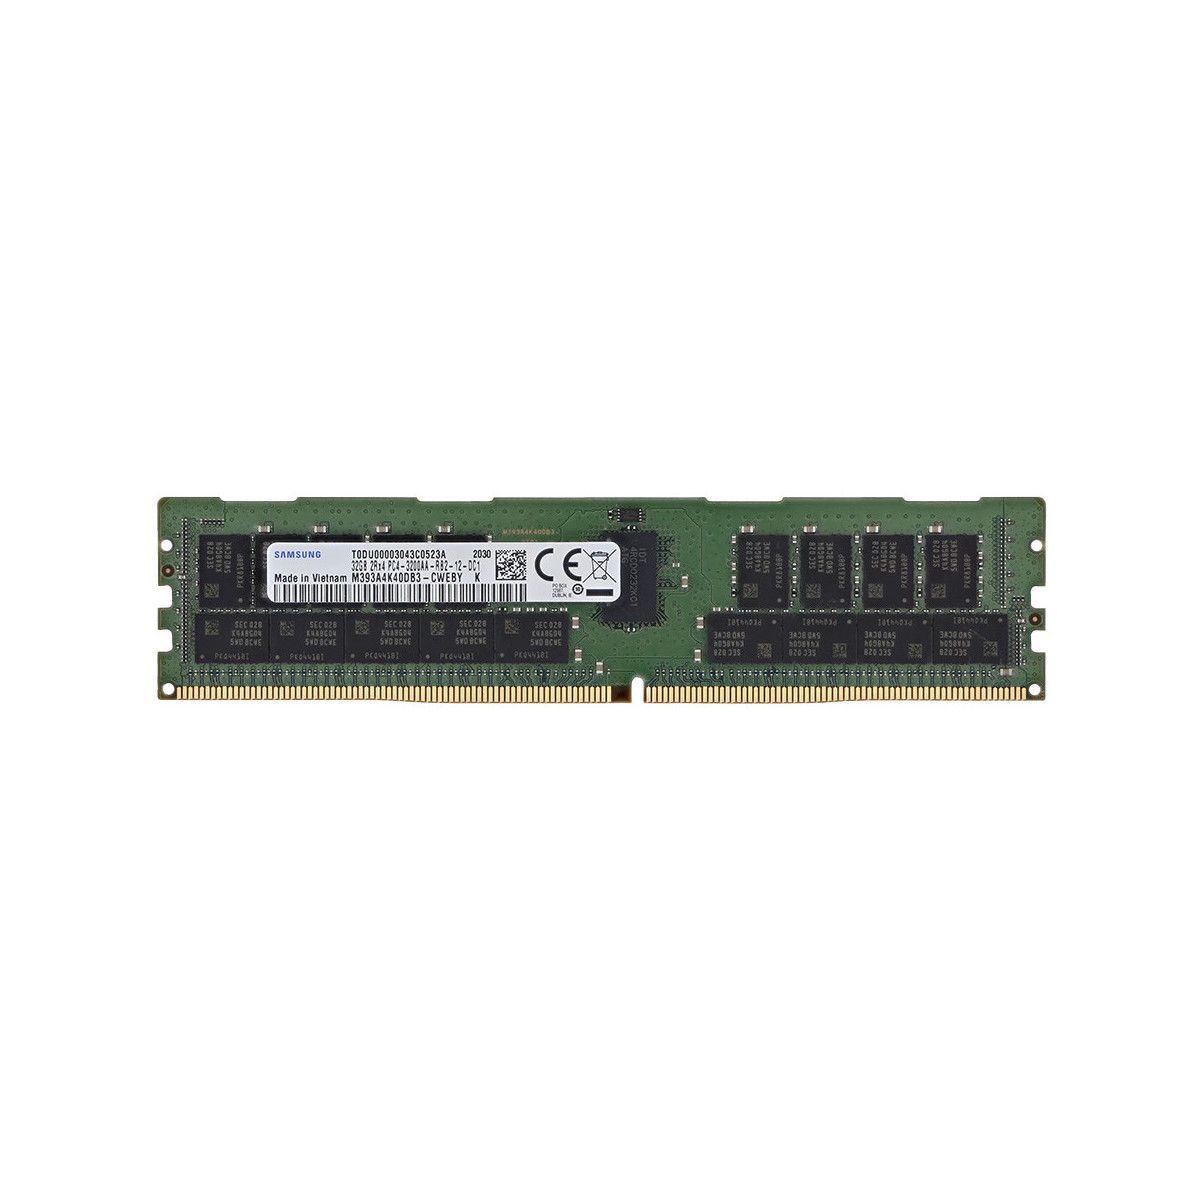 AB214252-MS - Memstar 1x 32GB DDR4-3200 RDIMM PC4-25600R - Memorie OEM compatibilă Mem-Star 1 - Memstar 